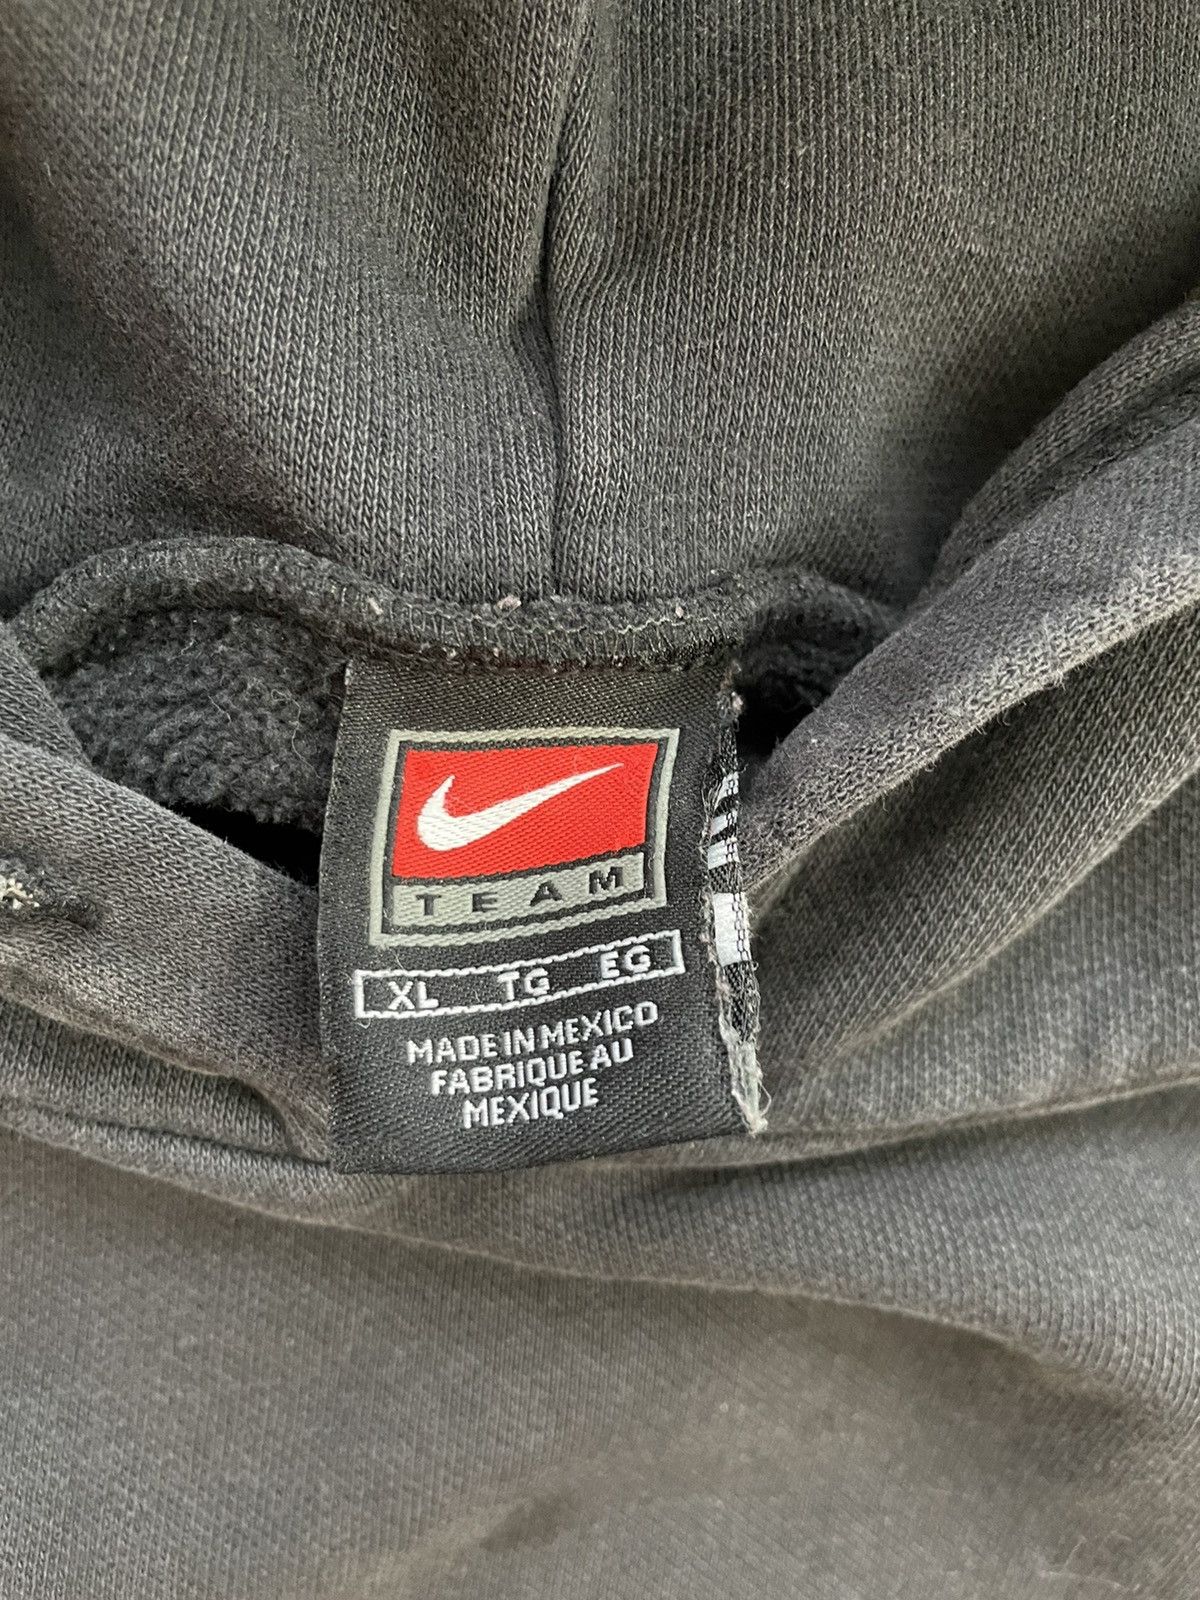 Nike Vintage Nike Middle Pocket Swoosh 90s Hoodie Black XL Hype Size US XL / EU 56 / 4 - 4 Thumbnail